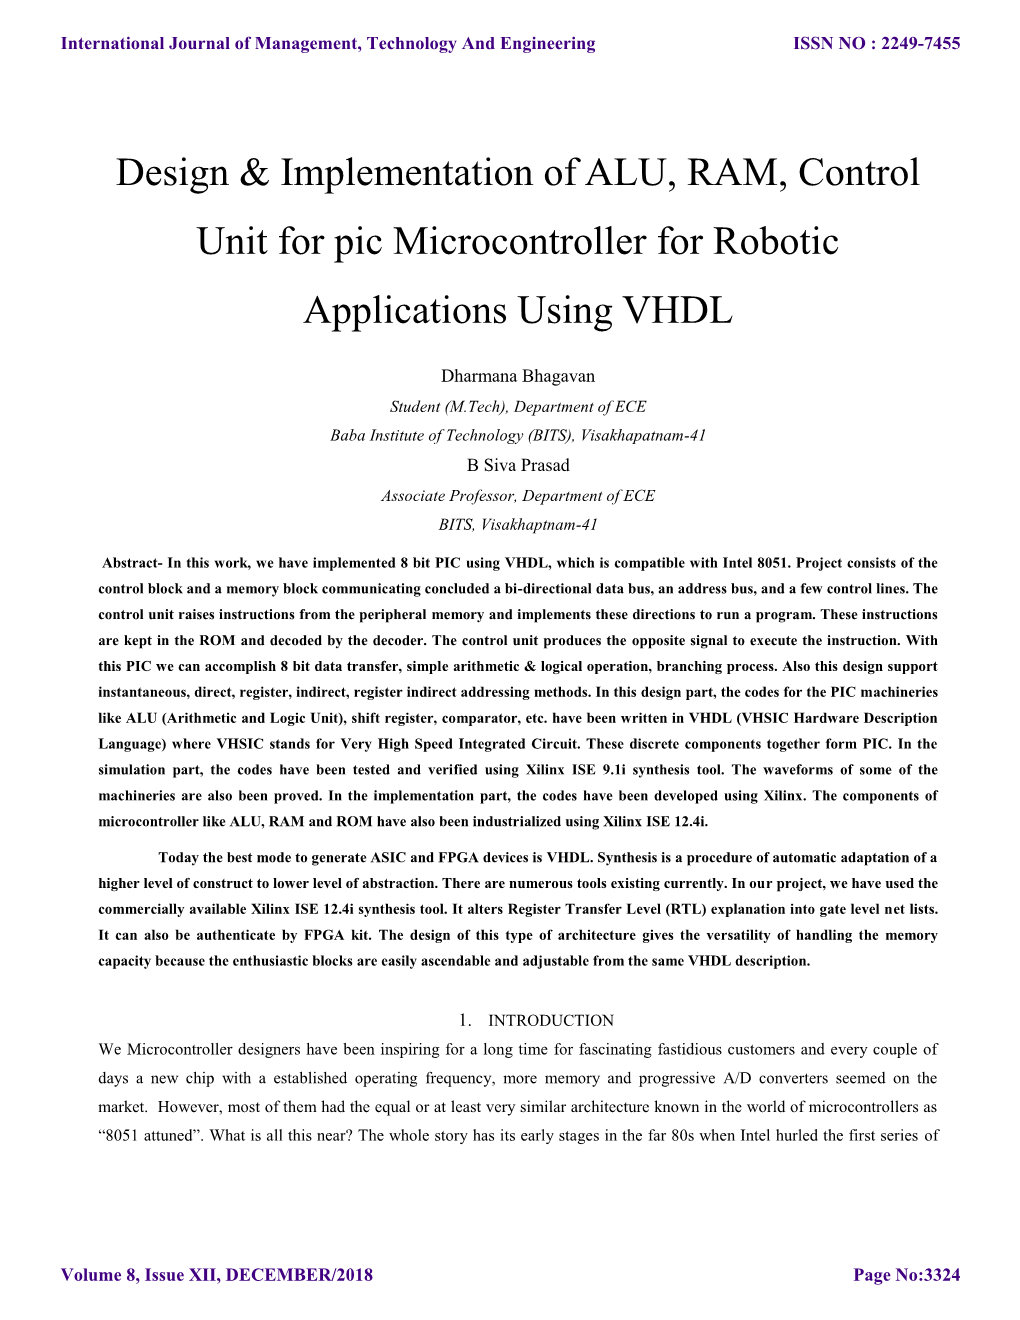 Design & Implementation of ALU, RAM, Control Unit for Pic